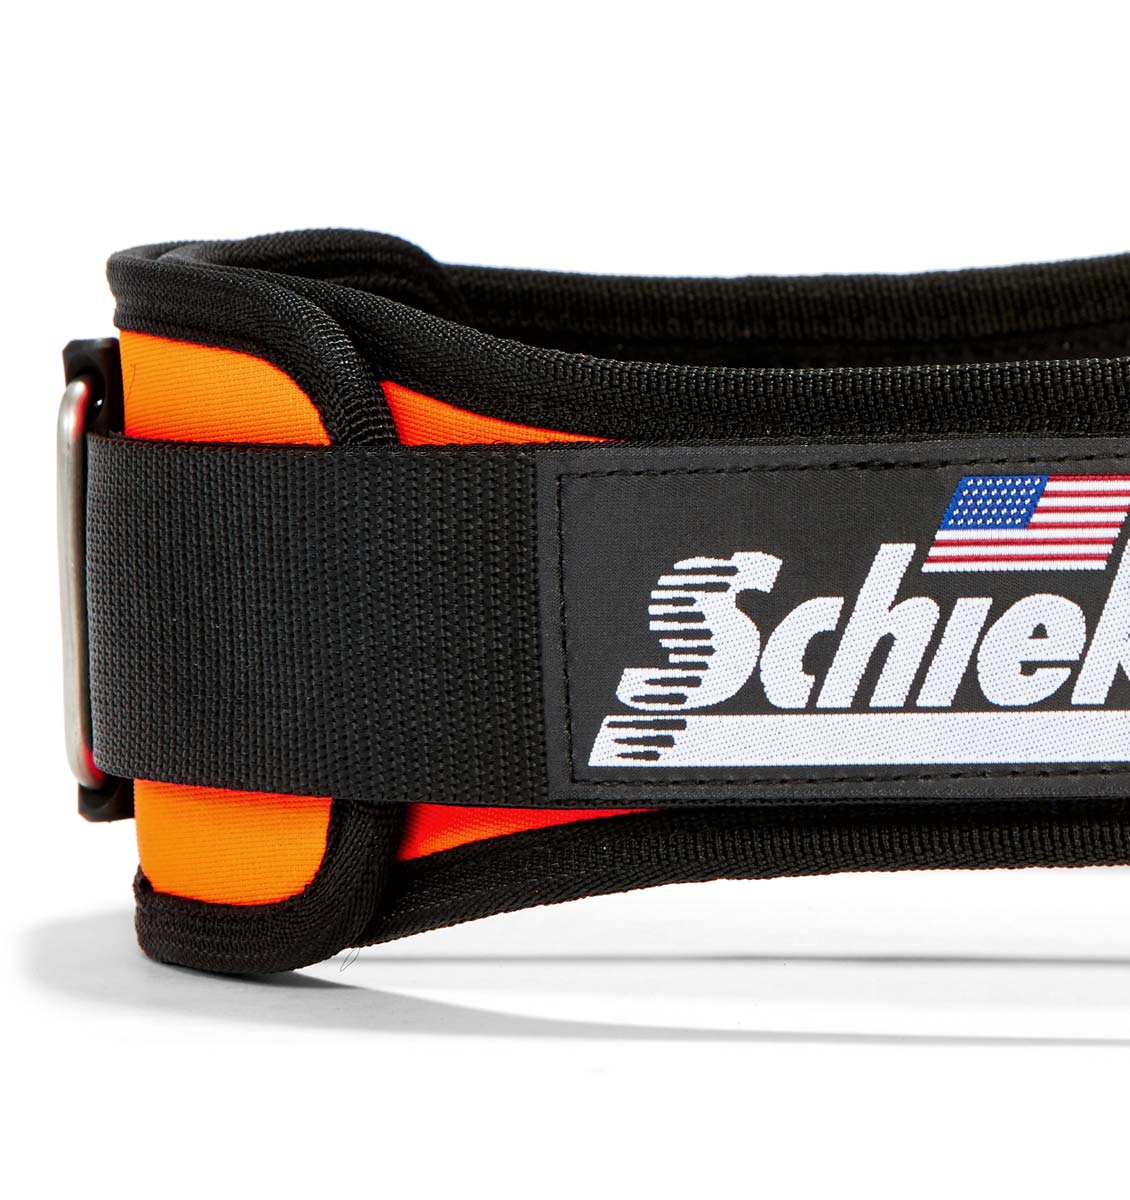 2004 Schiek Contour Weight Lifting Belt Orange Side Close Up